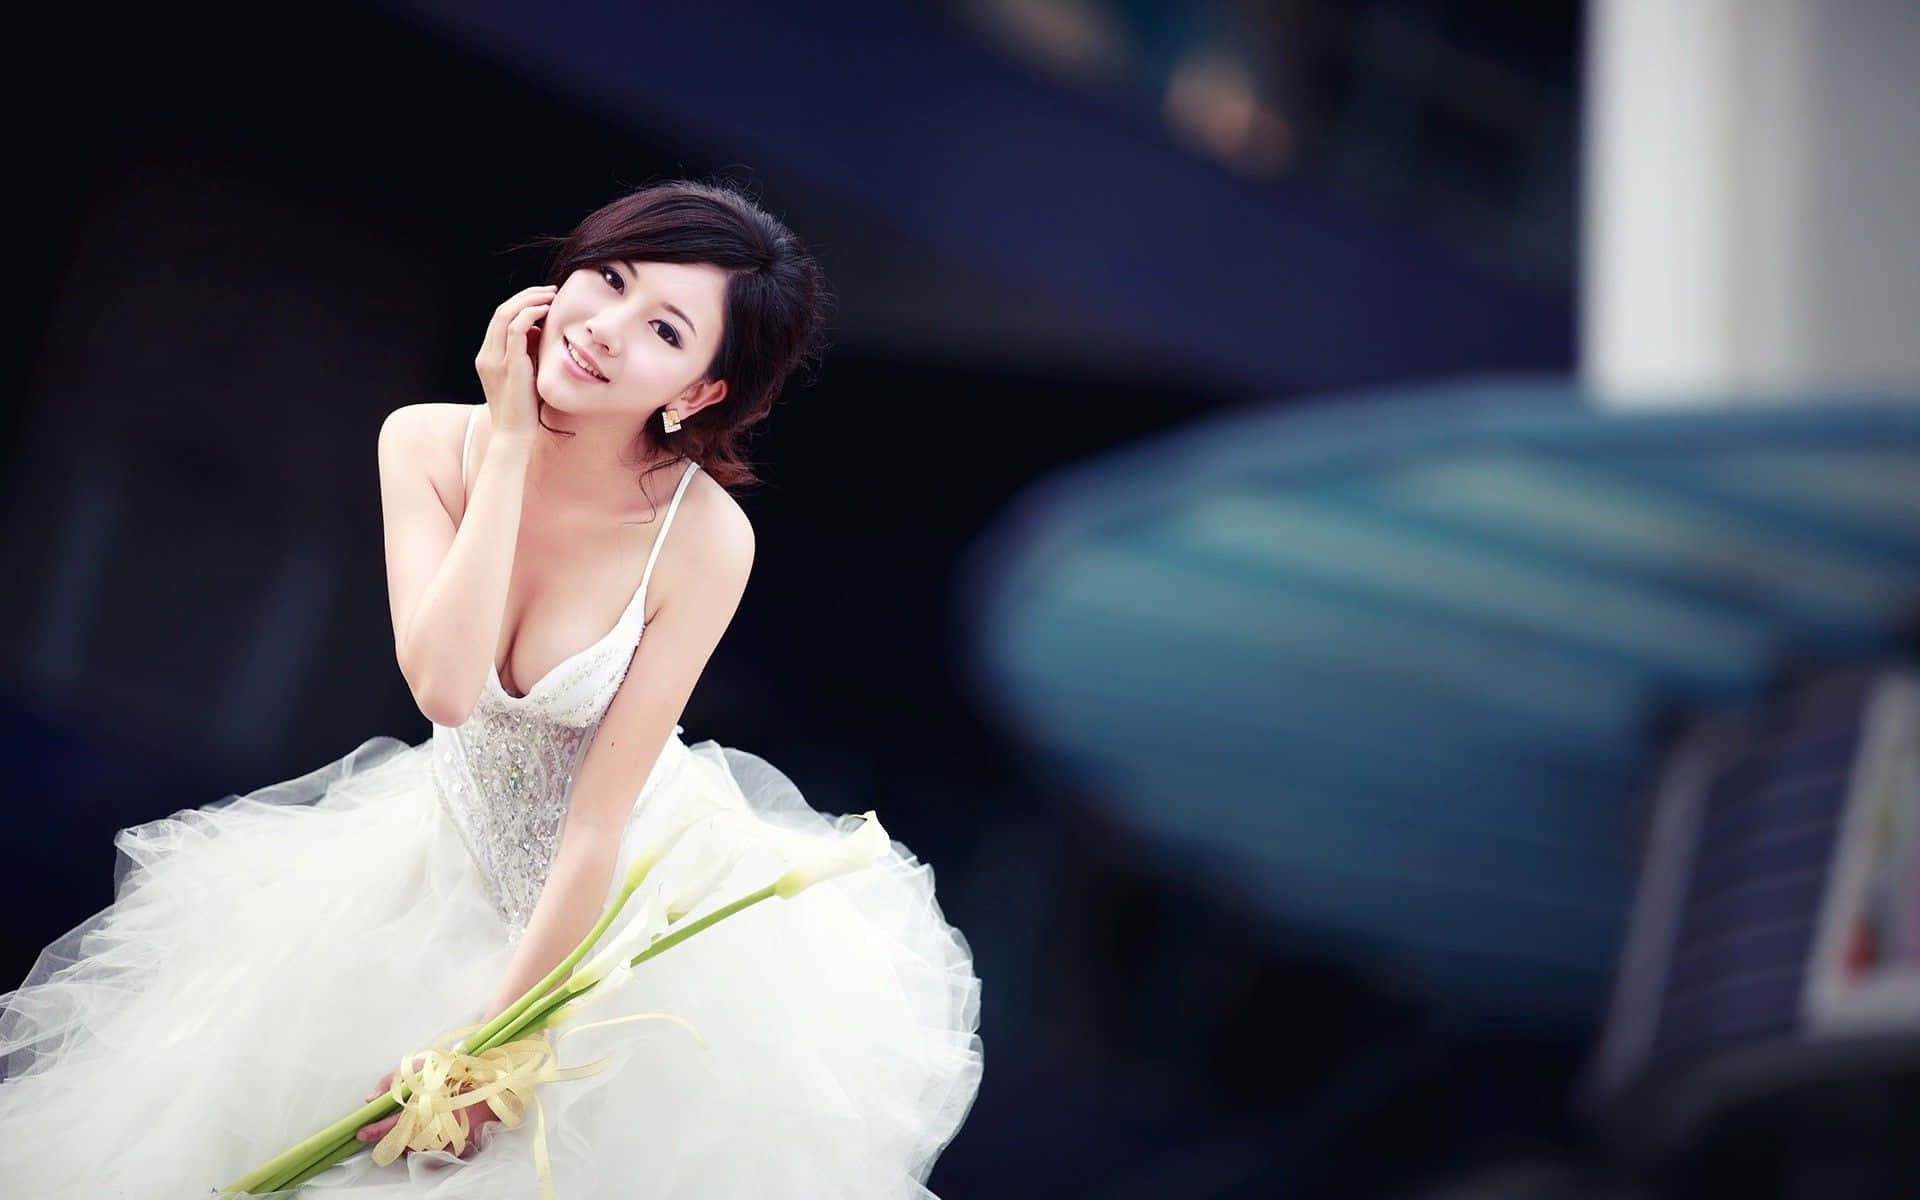 Elegant Bridal Background with Wedding Gown